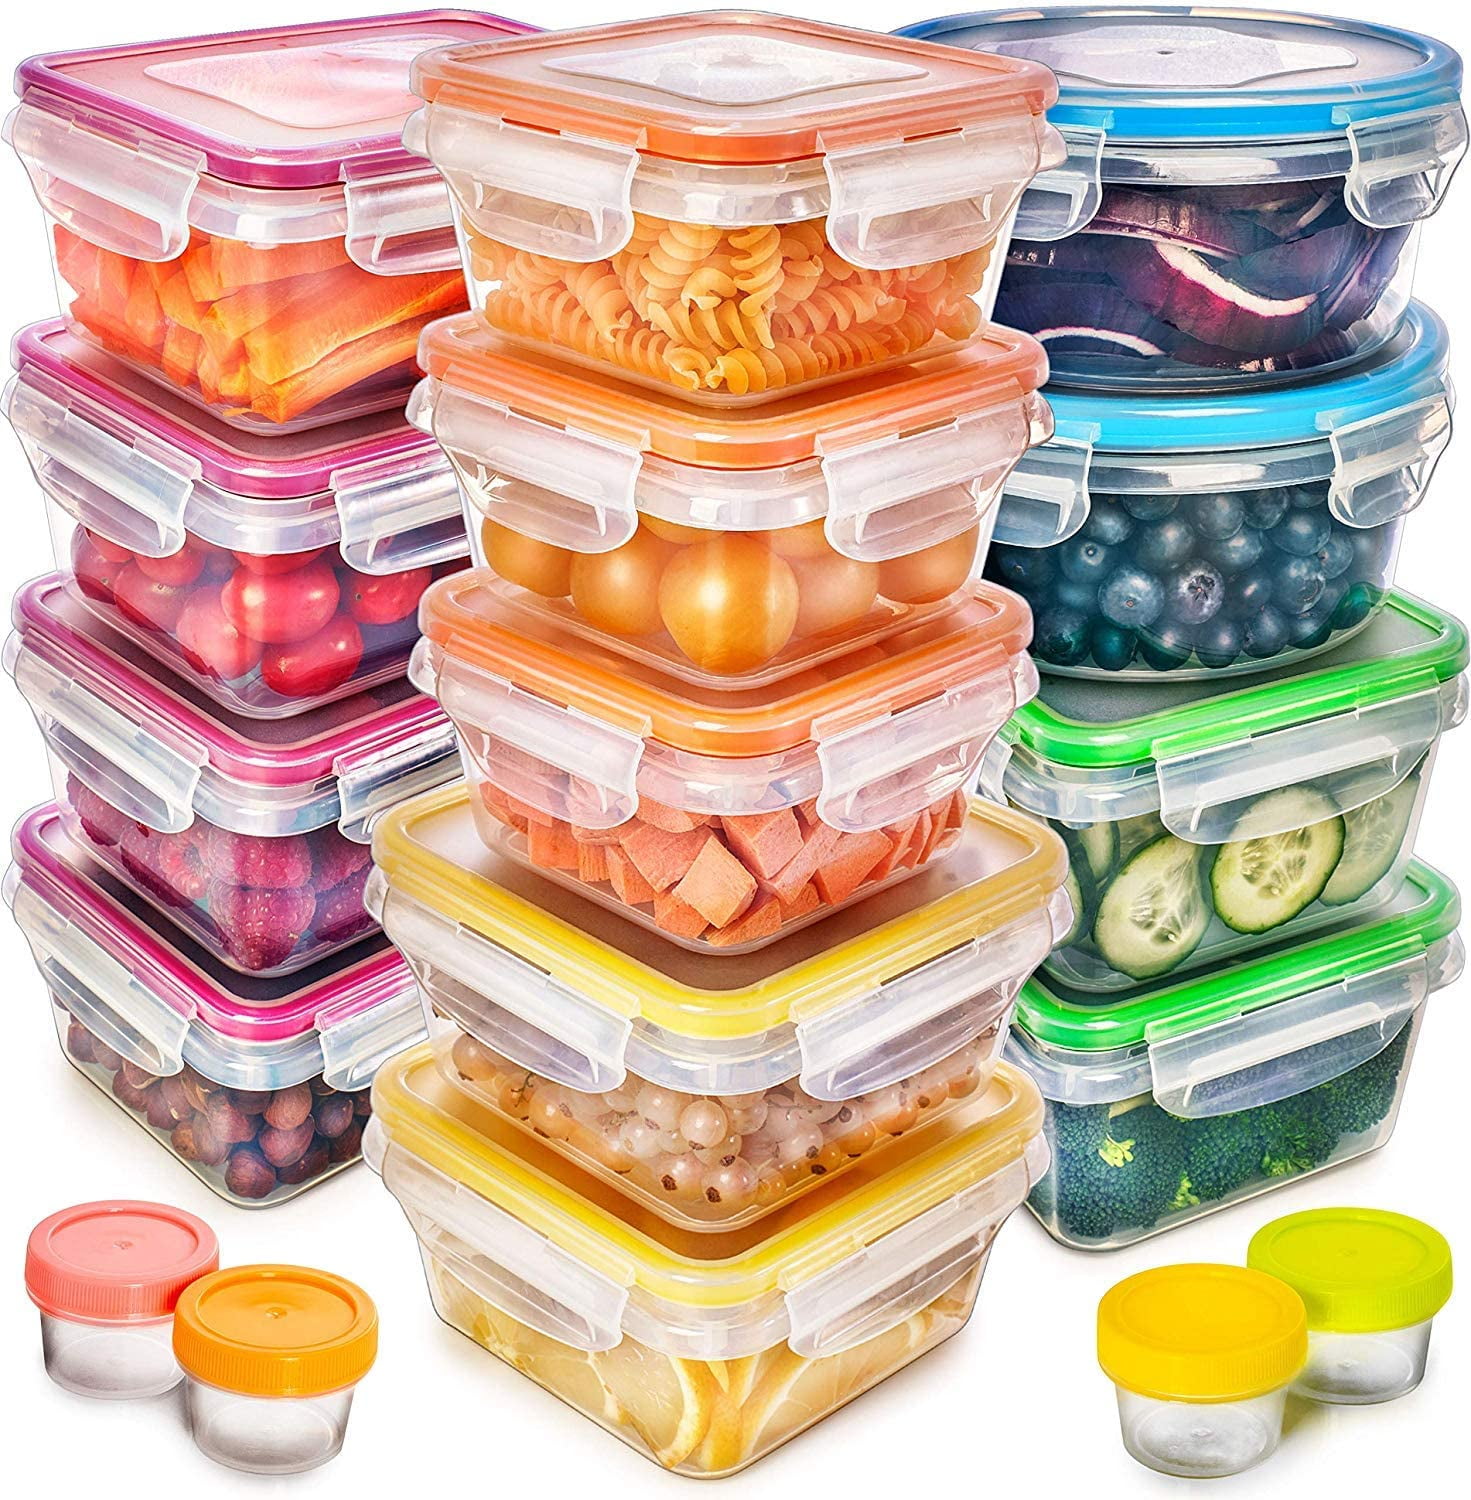 Snaplock Nesting Food Storage Container - 3pk